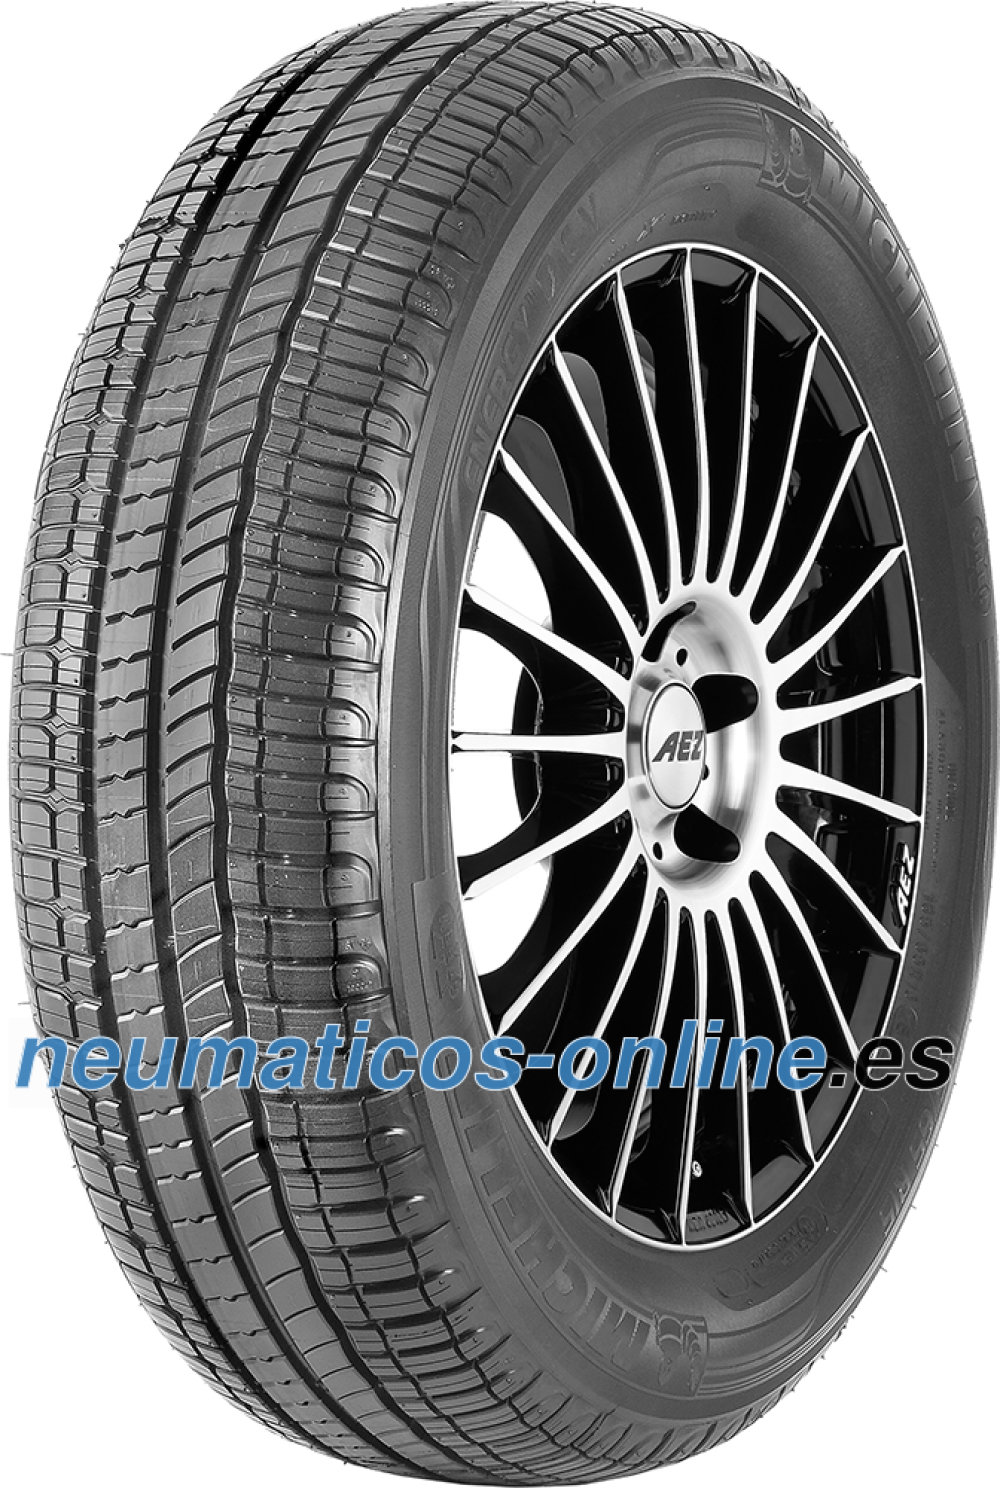 88Q x Neumáticos Michelin Verde Marca nuevo Renault Zoe 185 X 65 X 15 